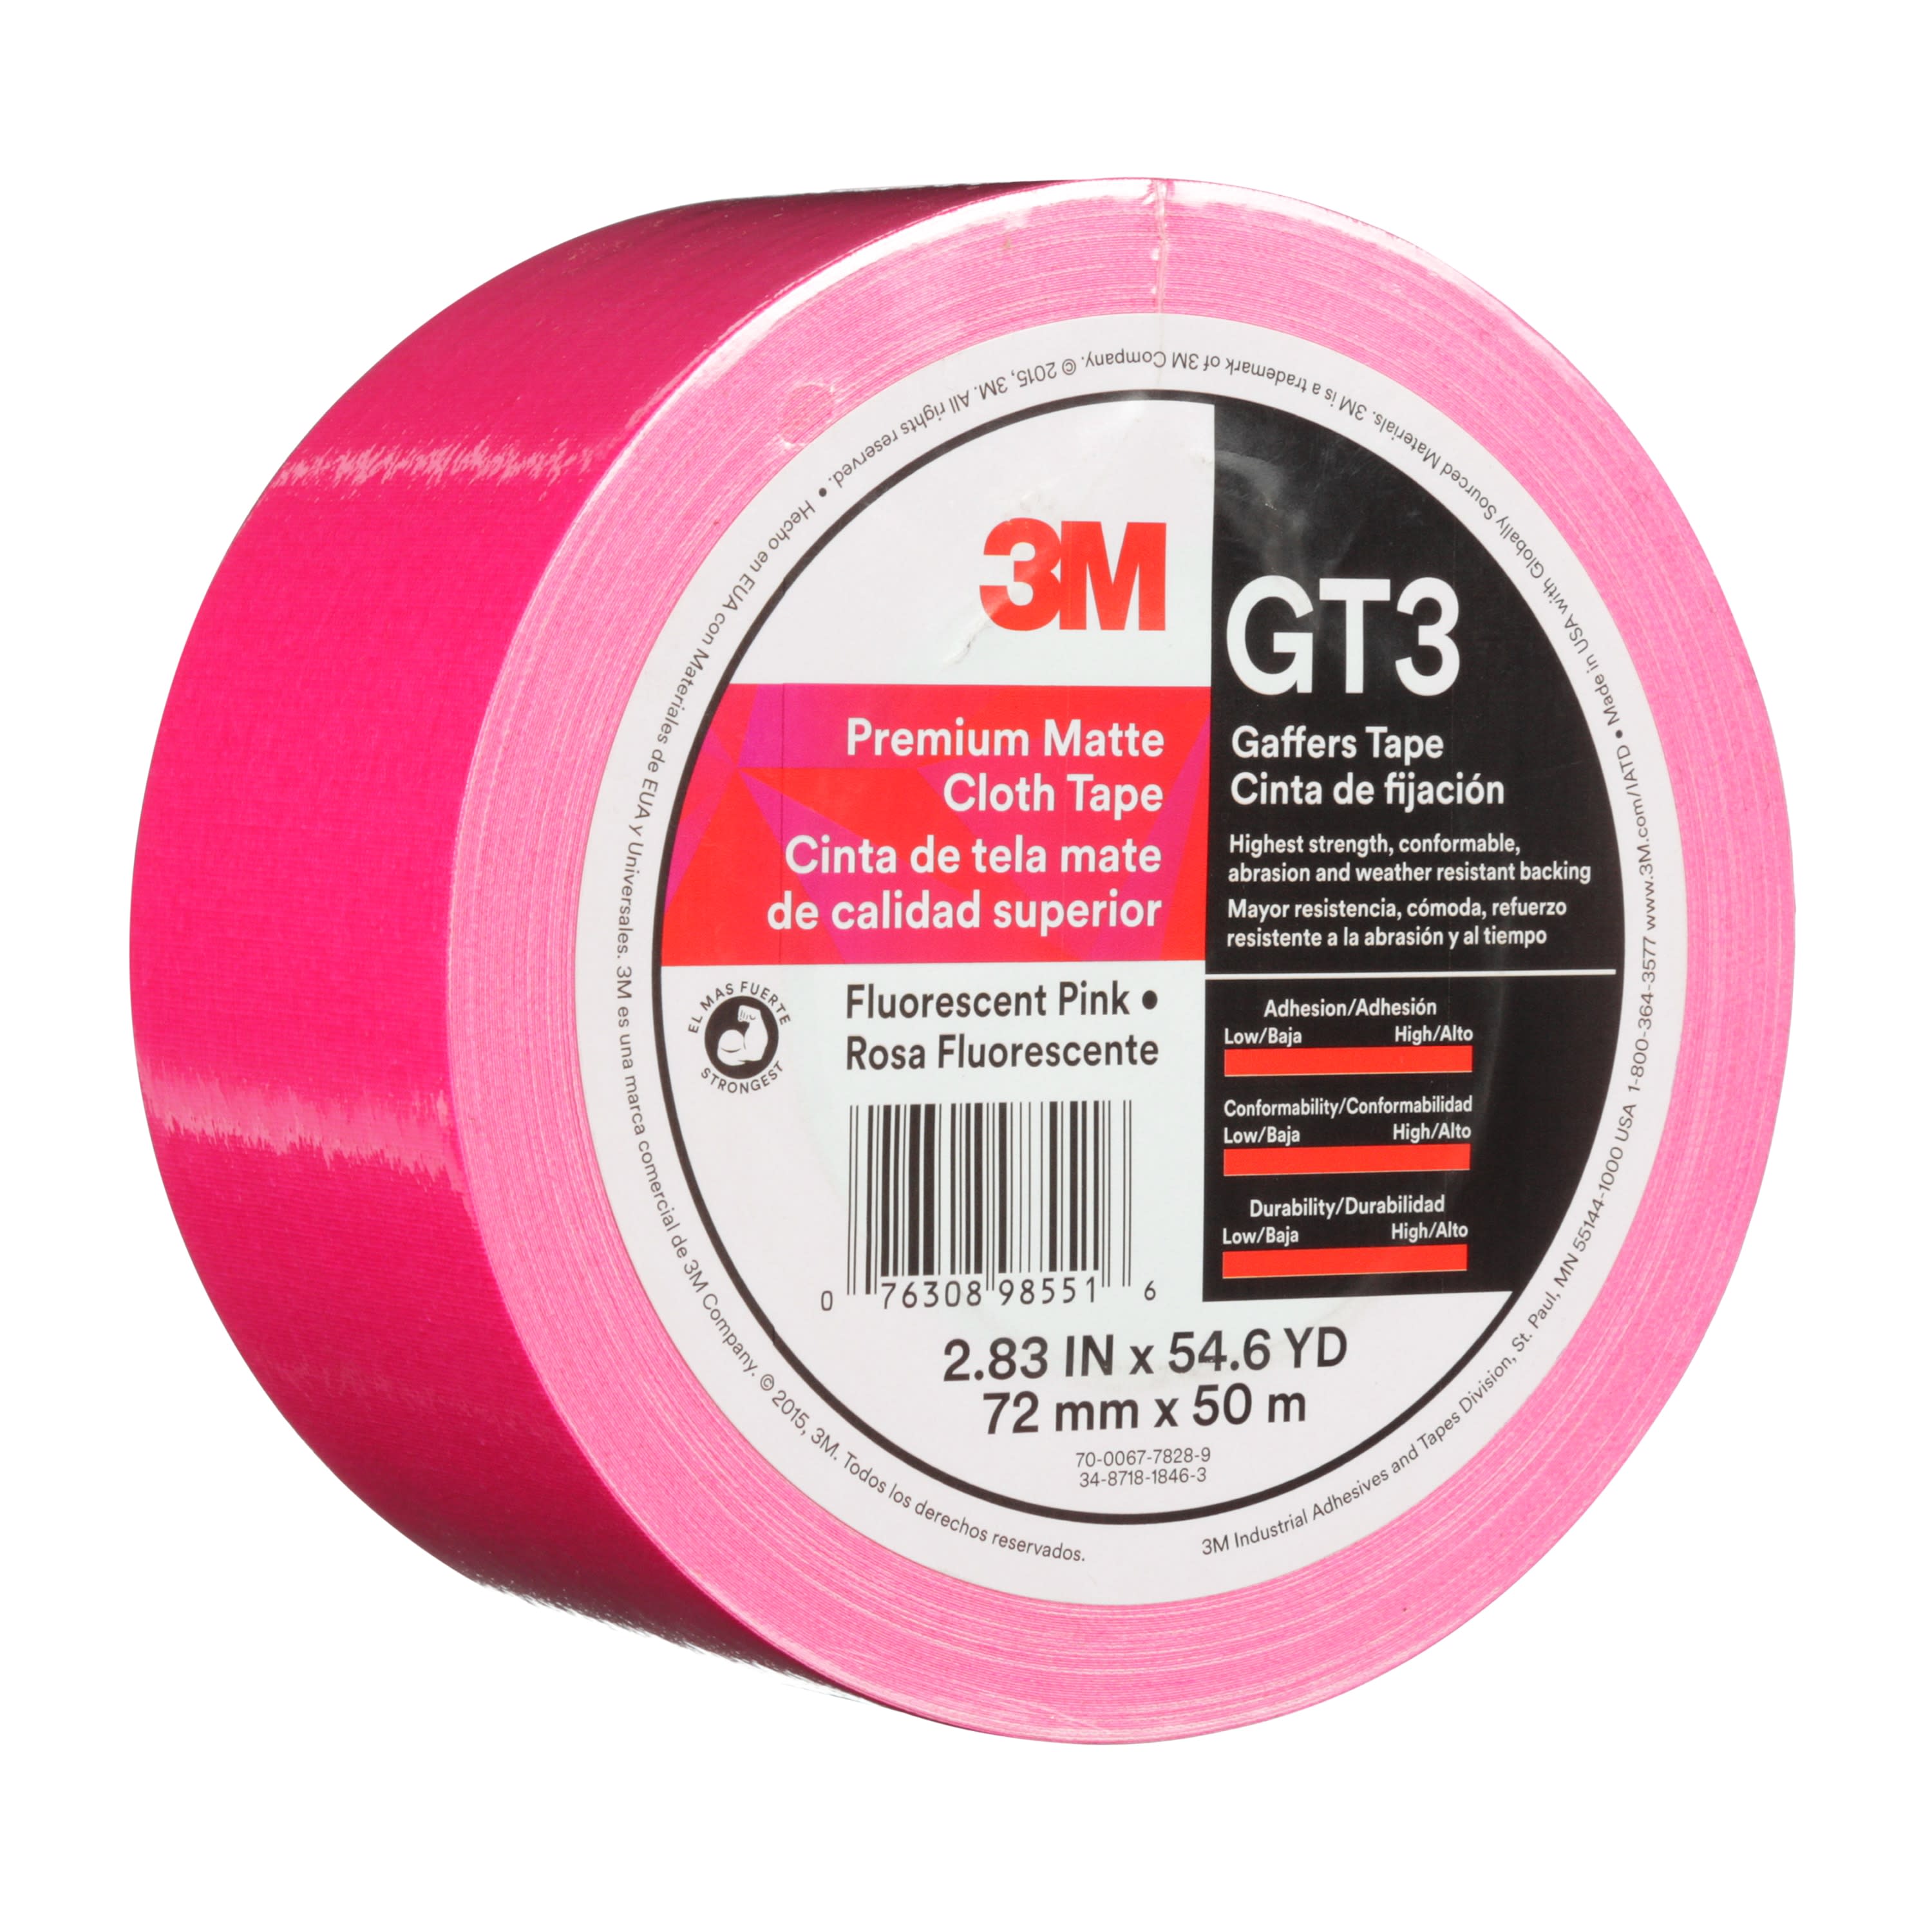 3M™ Premium Matte Cloth (Gaffers) Tape GT3, Fluorescent Pink, 72 mm x 50
m, 11 mil, 16 per case